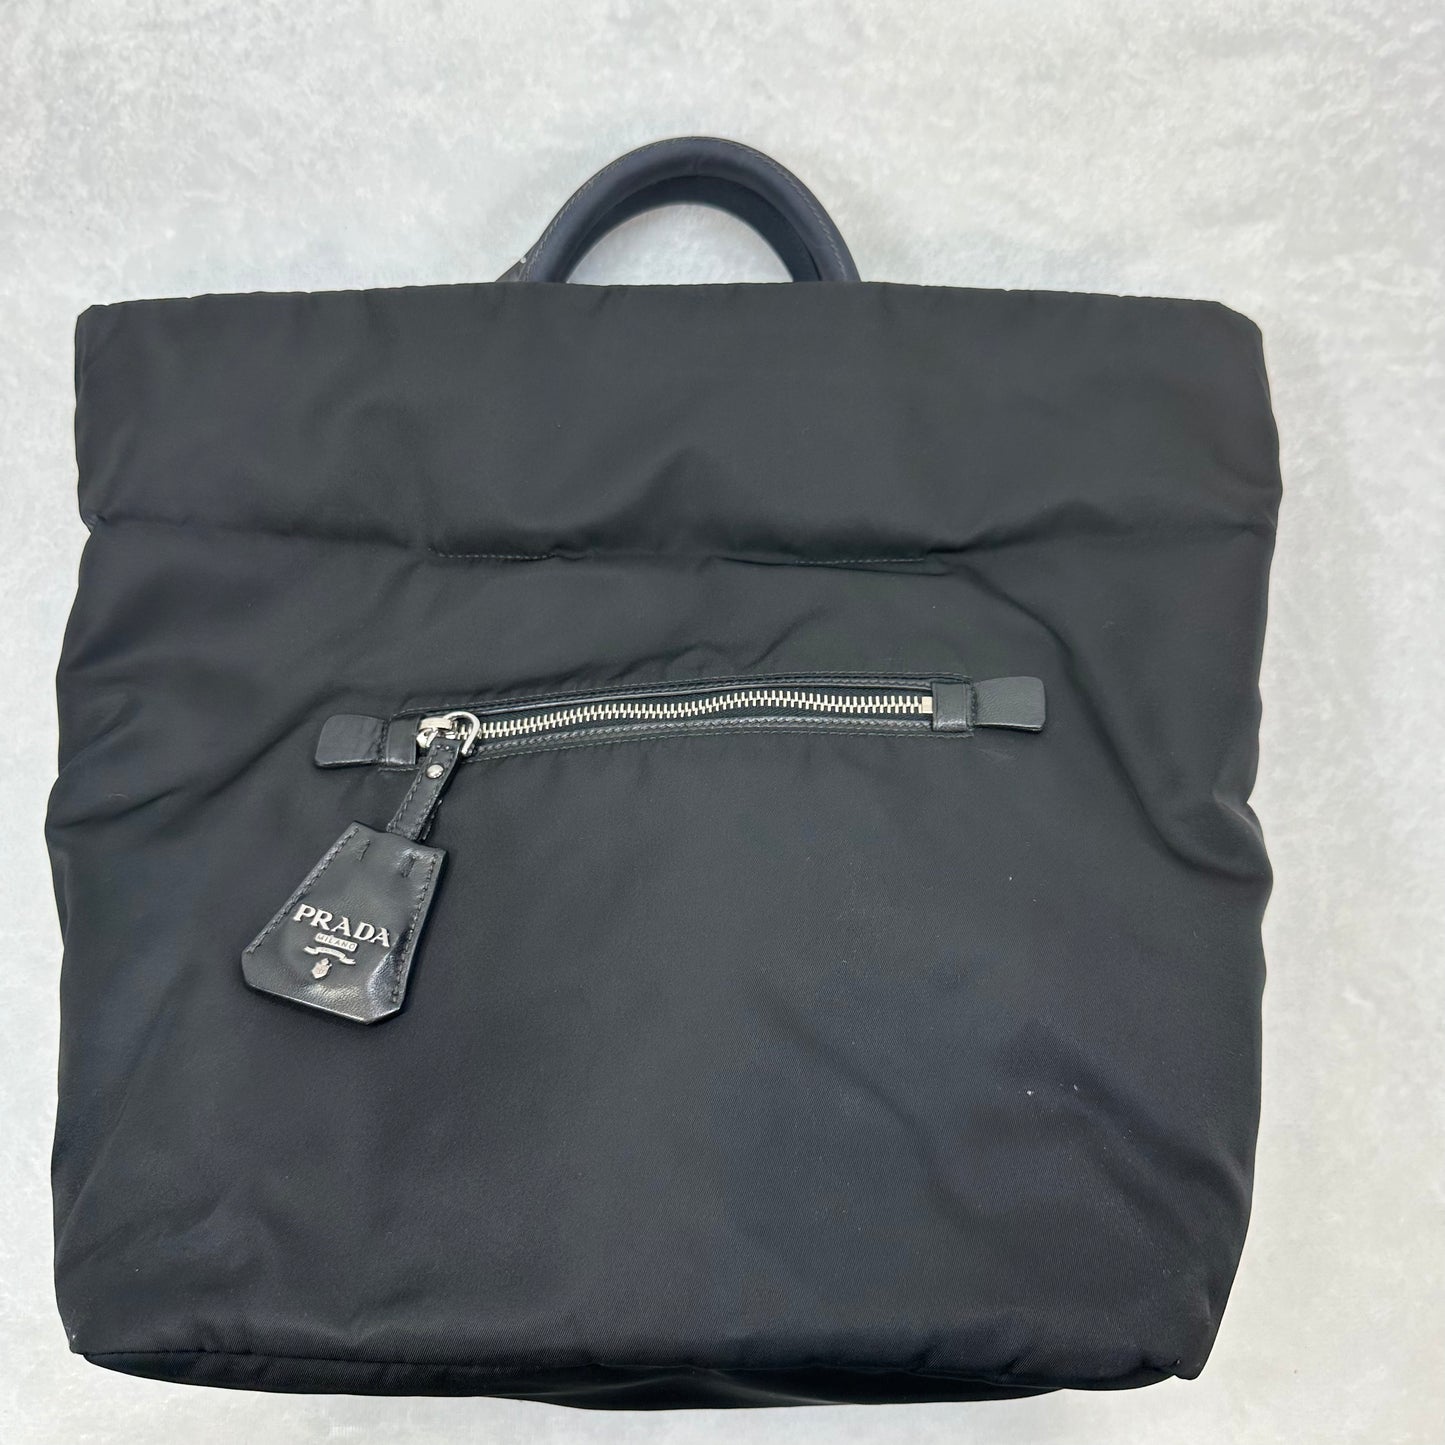 Handbag Designer By Prada  Size: Medium